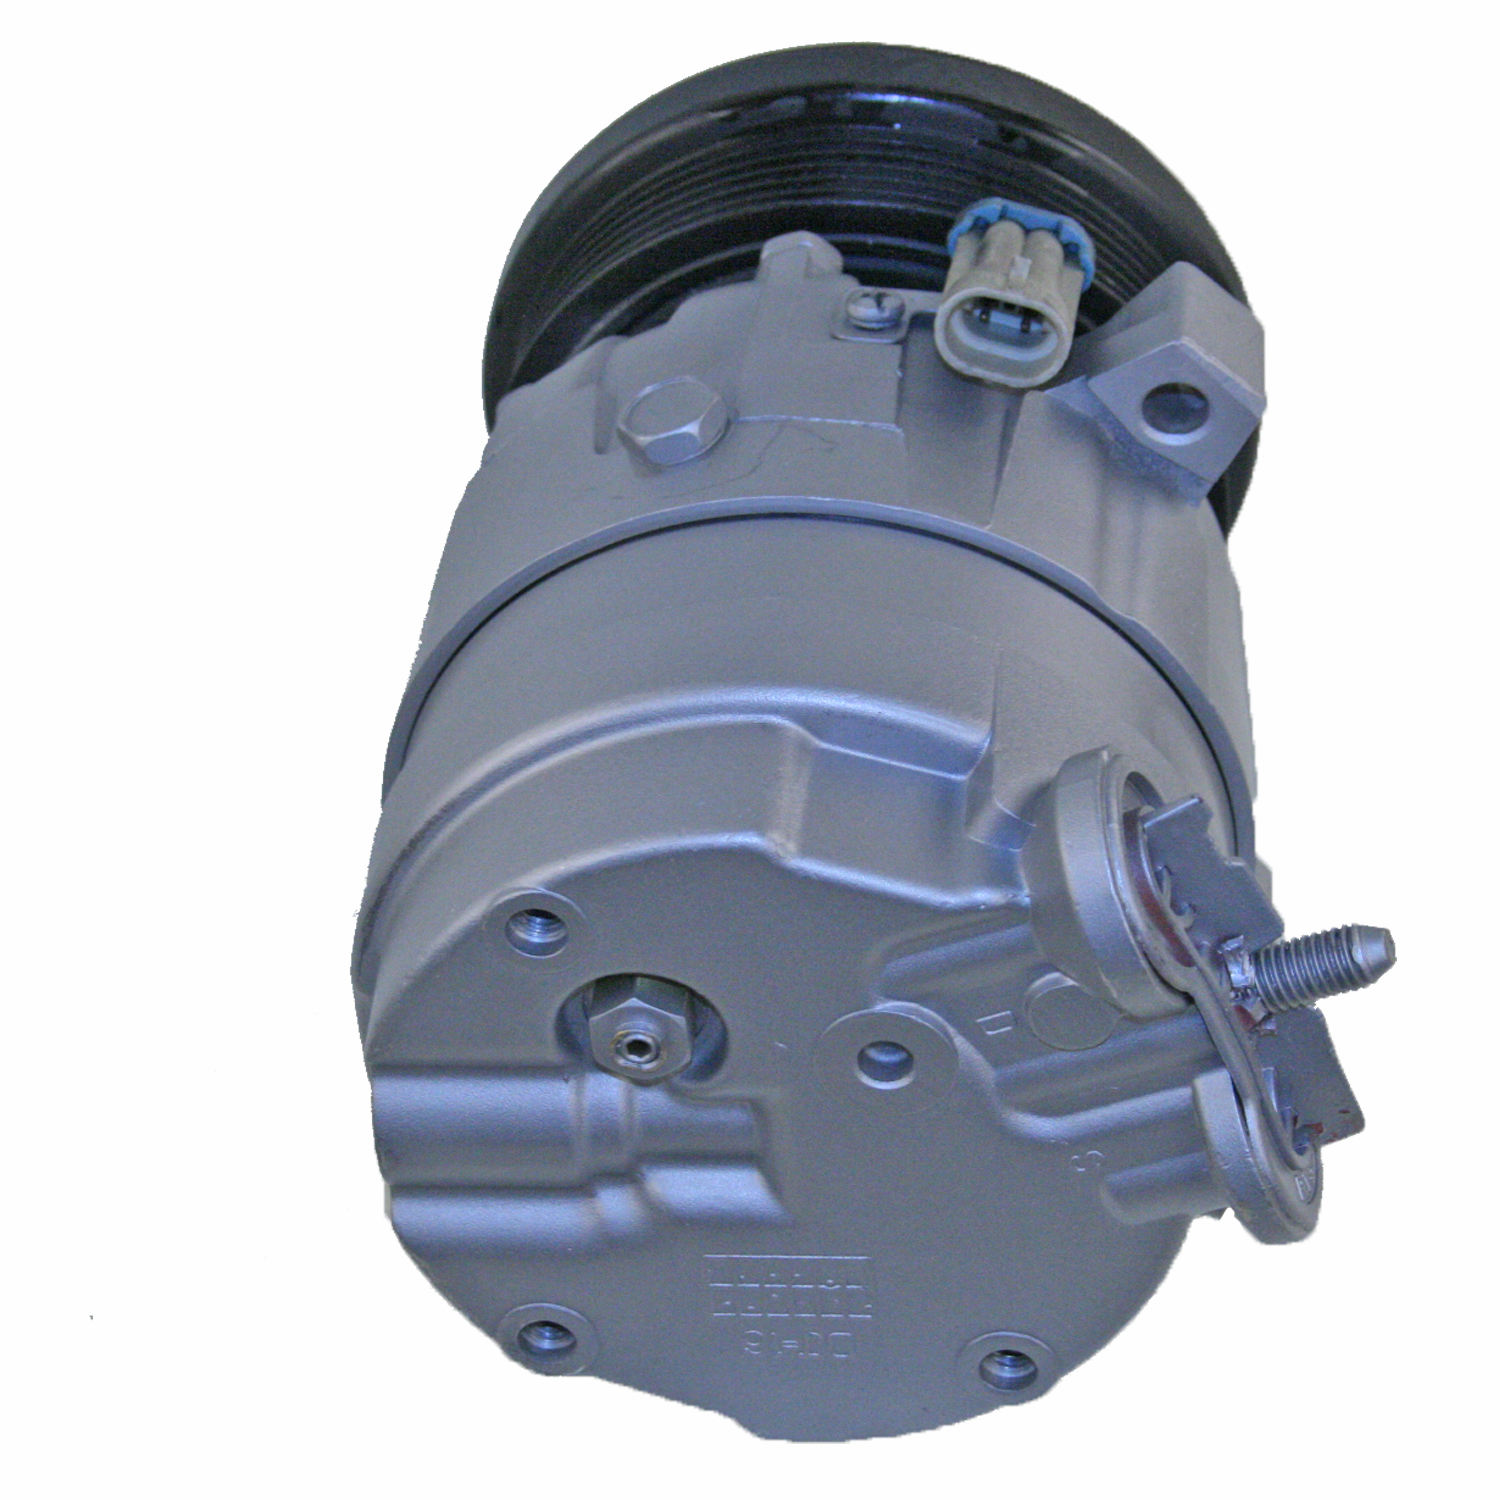 TCW Compressor 15-4003R Remanufactured Product Image field_60b6a13a6e67c